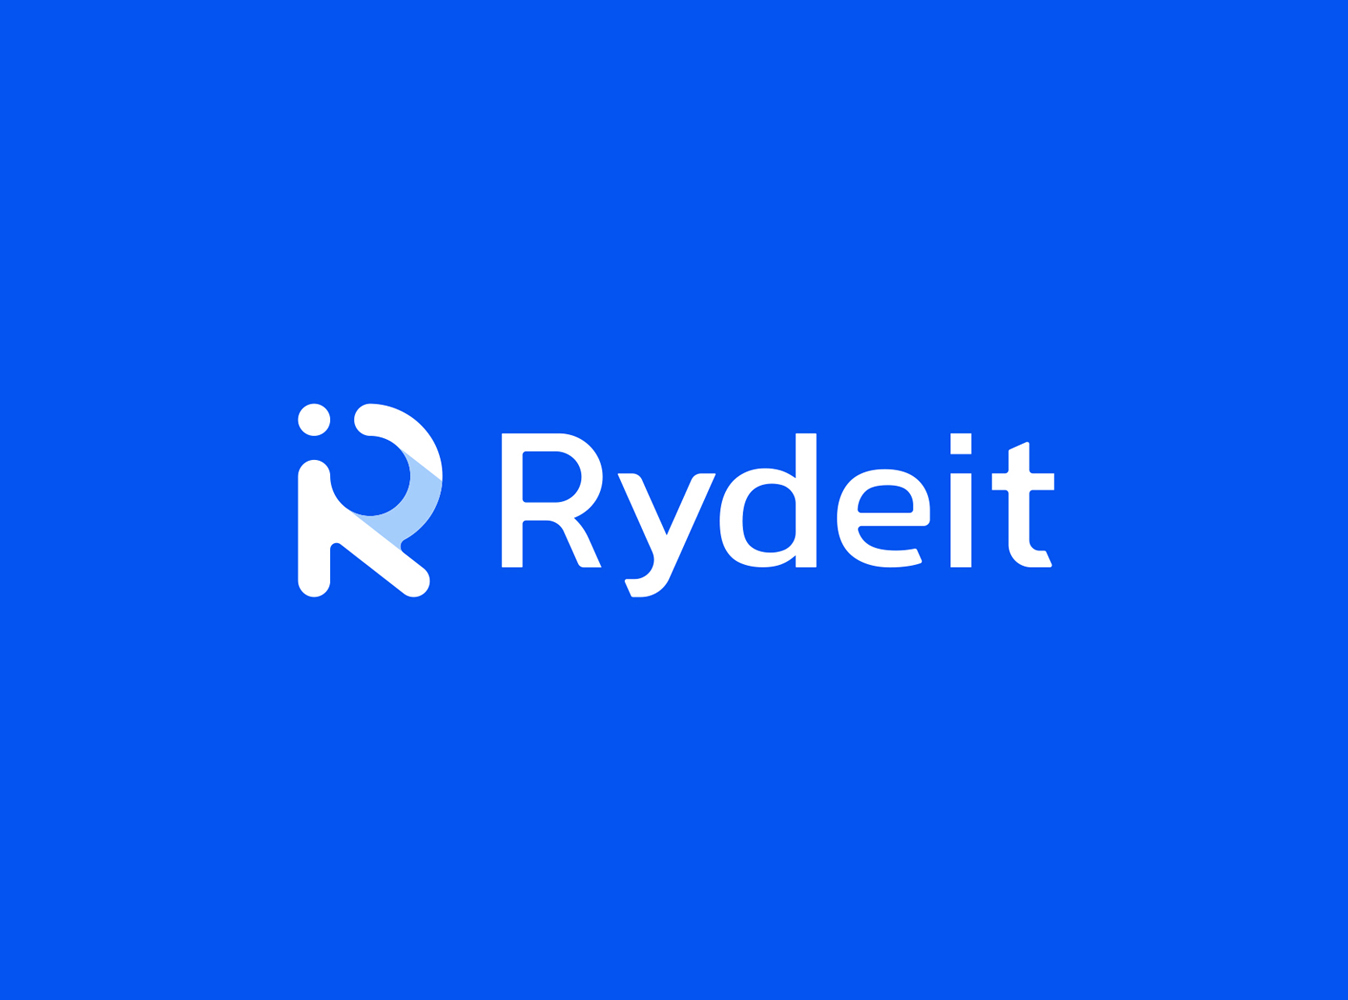 Rydeit 發財車品牌識別